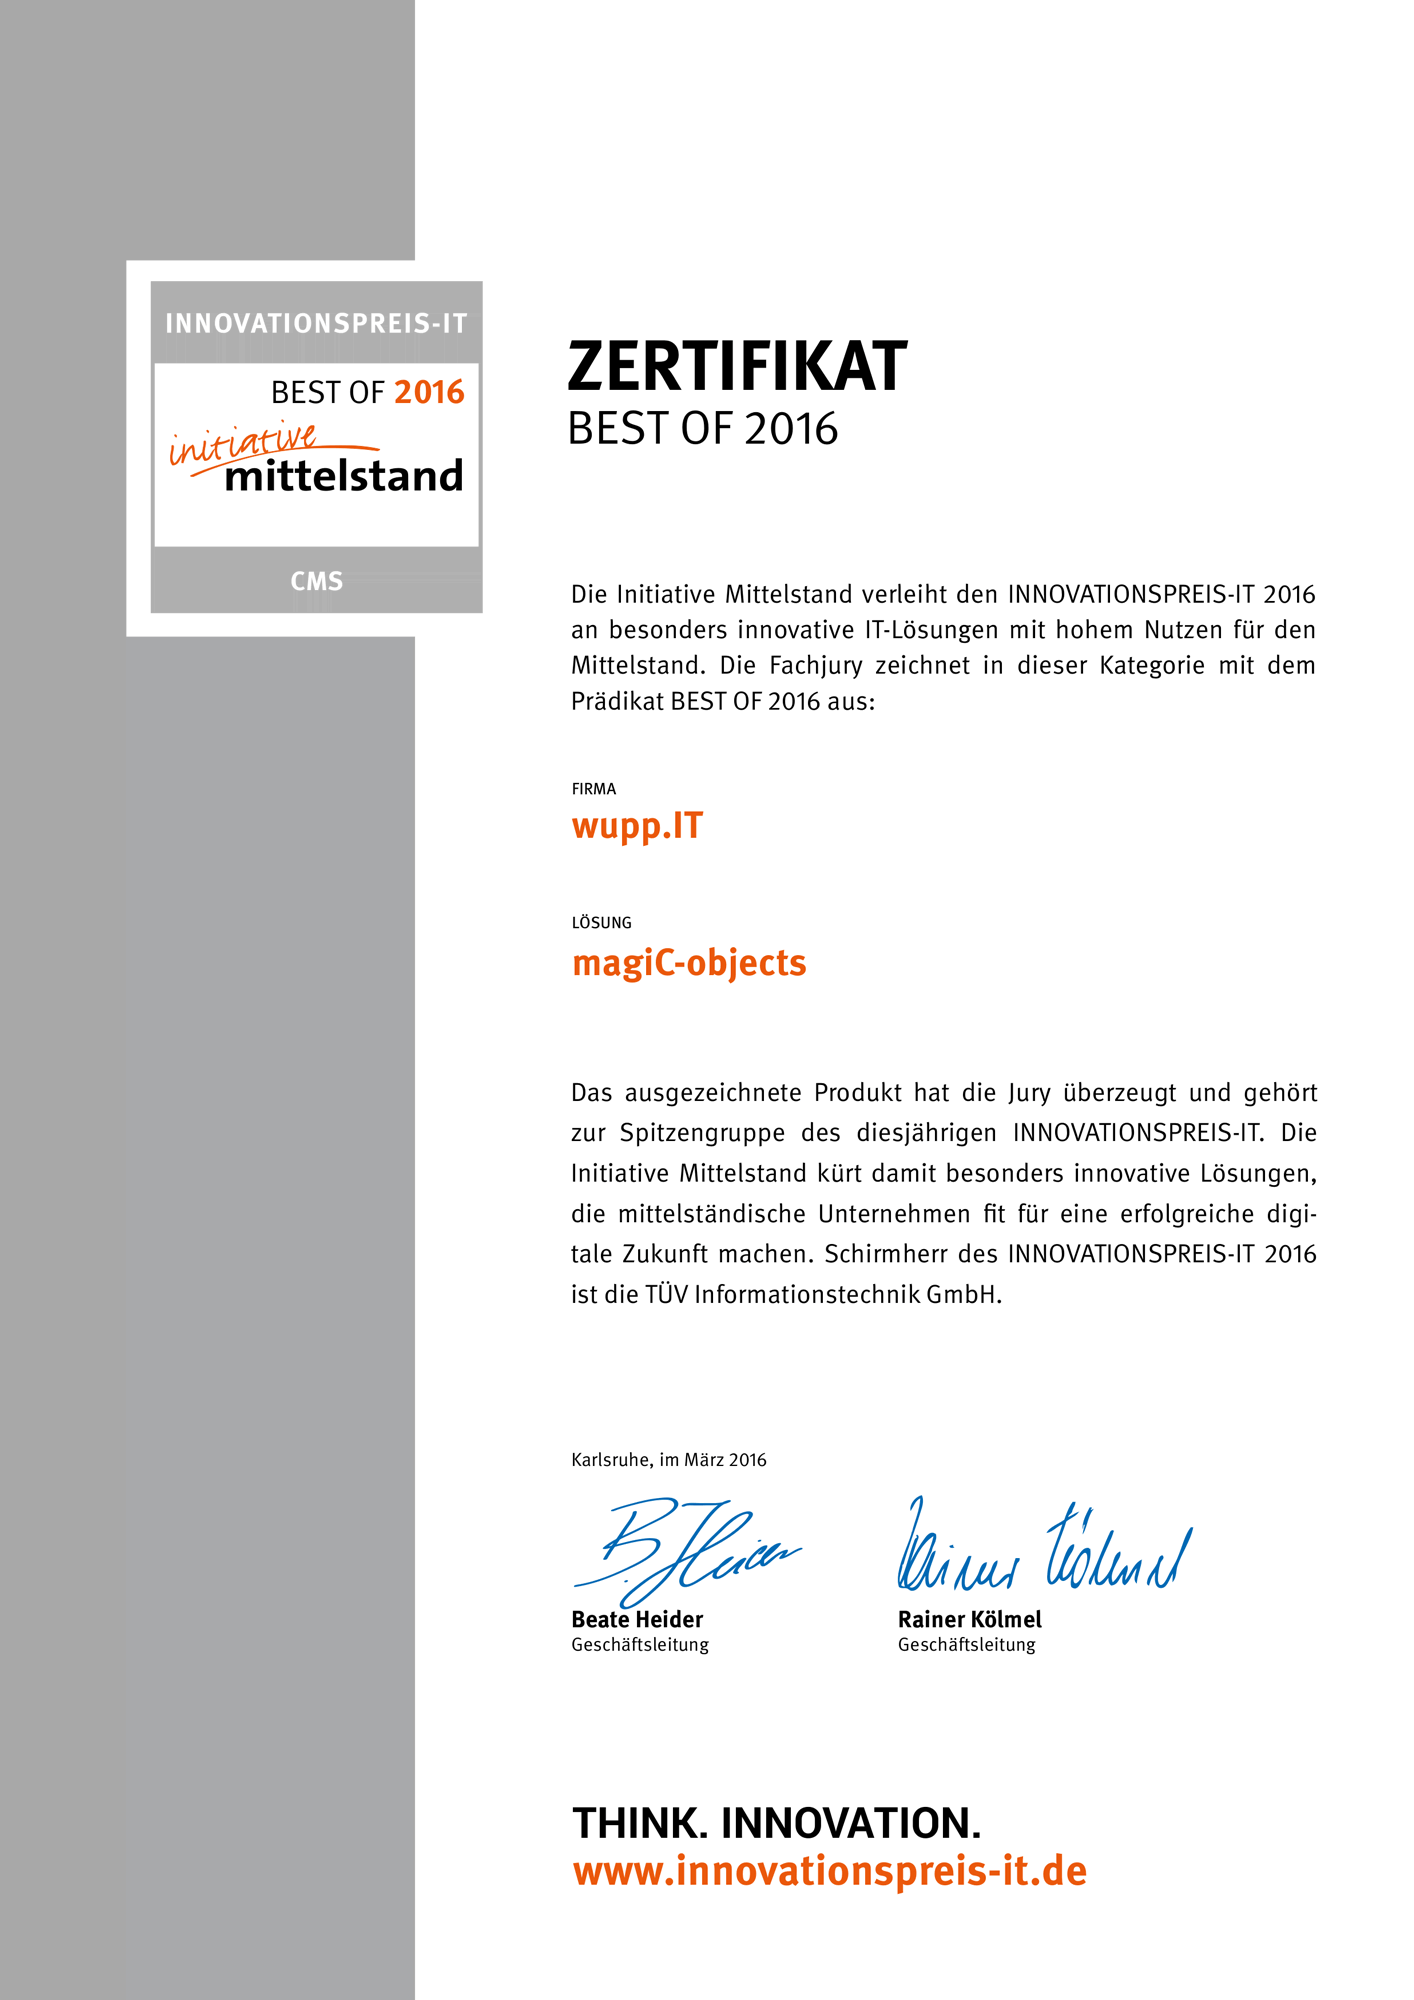 Zertifikat vom Innovationspreis-IT 2016 fr unser Produkt magiC-objects